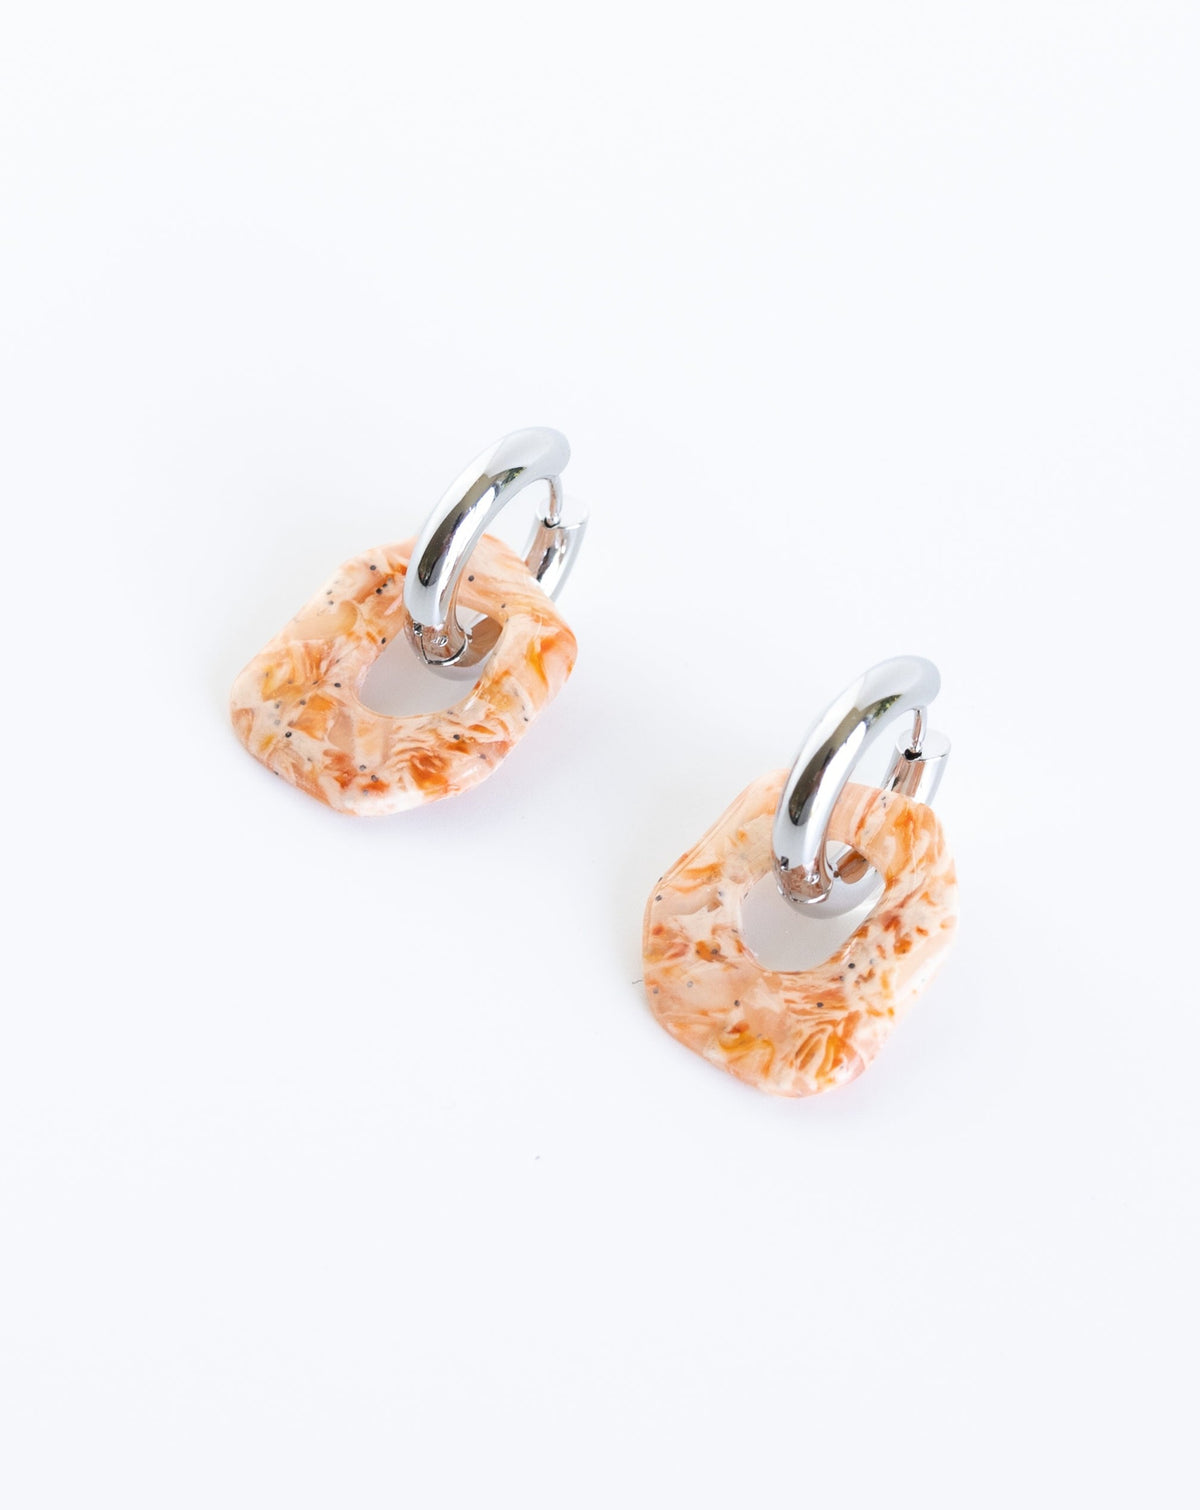 Darien earrings in Marble orange pattern with silver hoops, angled view